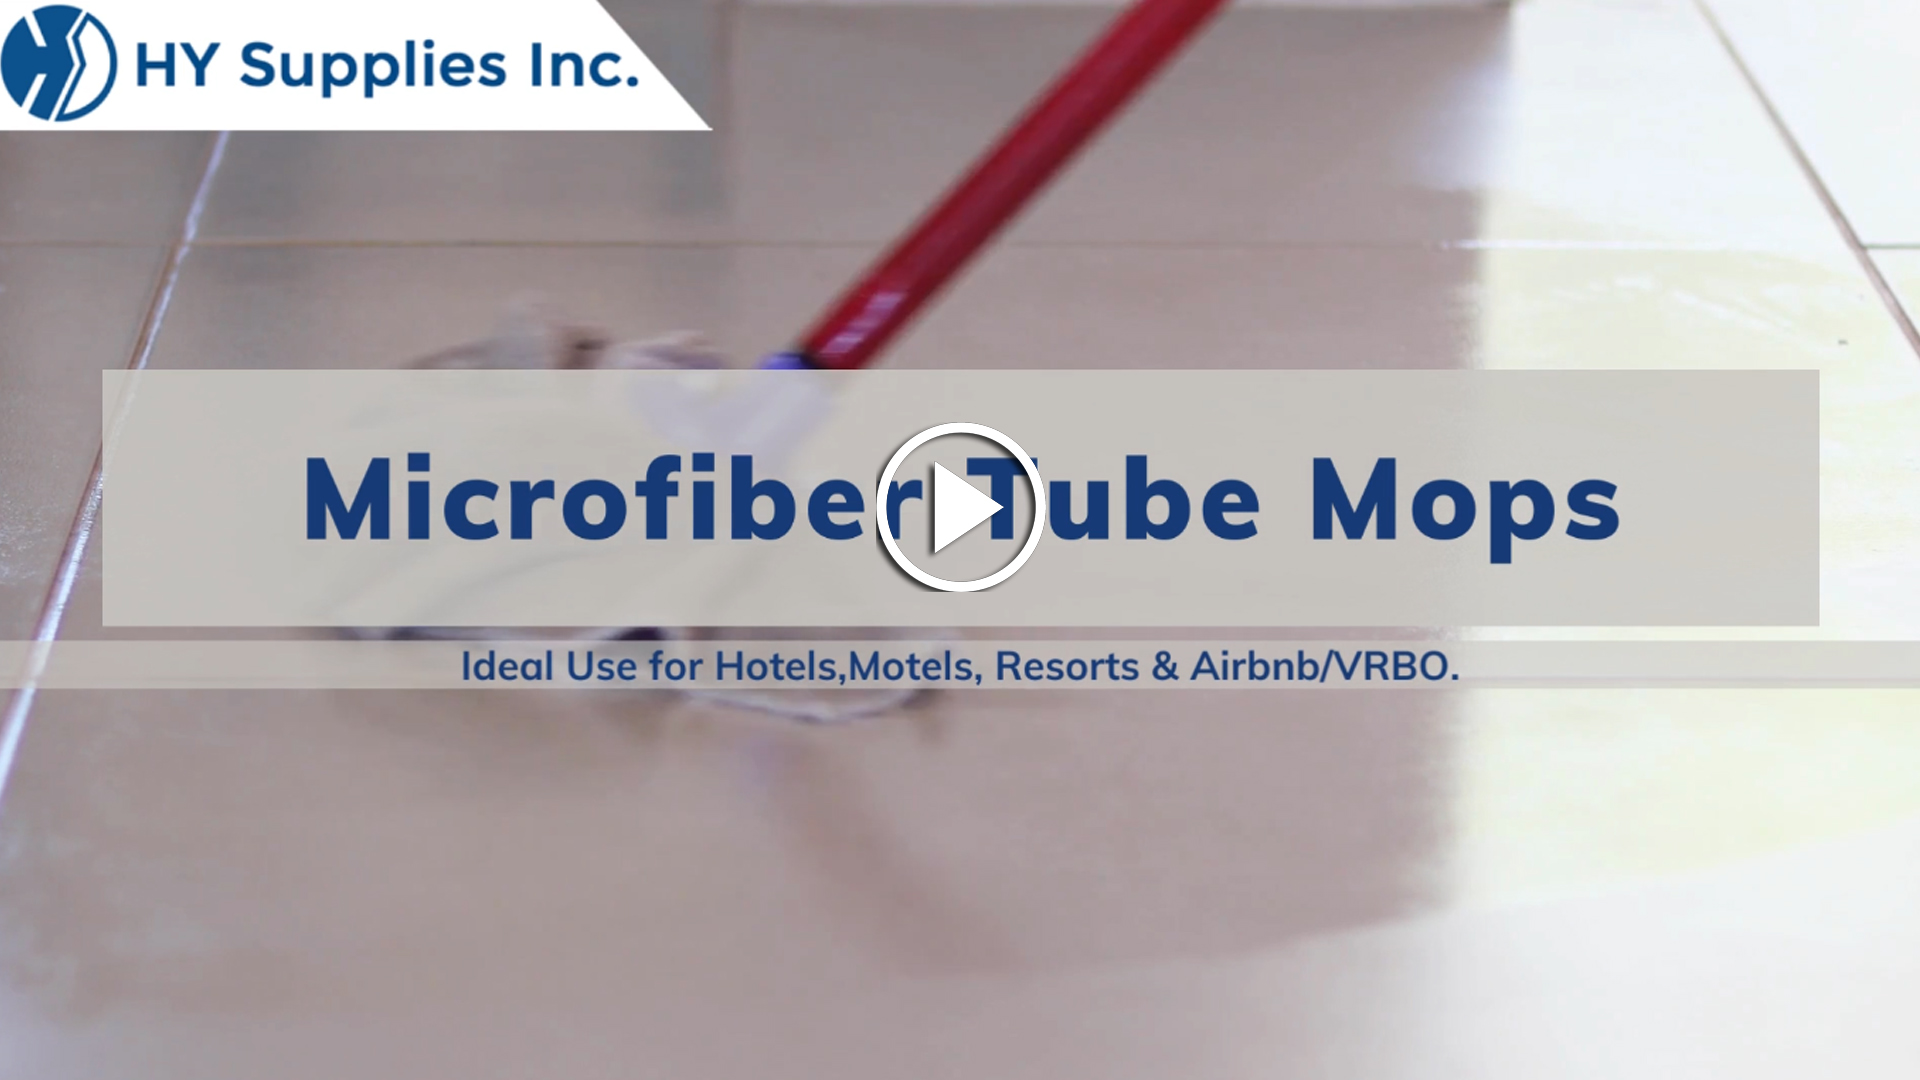 Microfiber Tube Mops